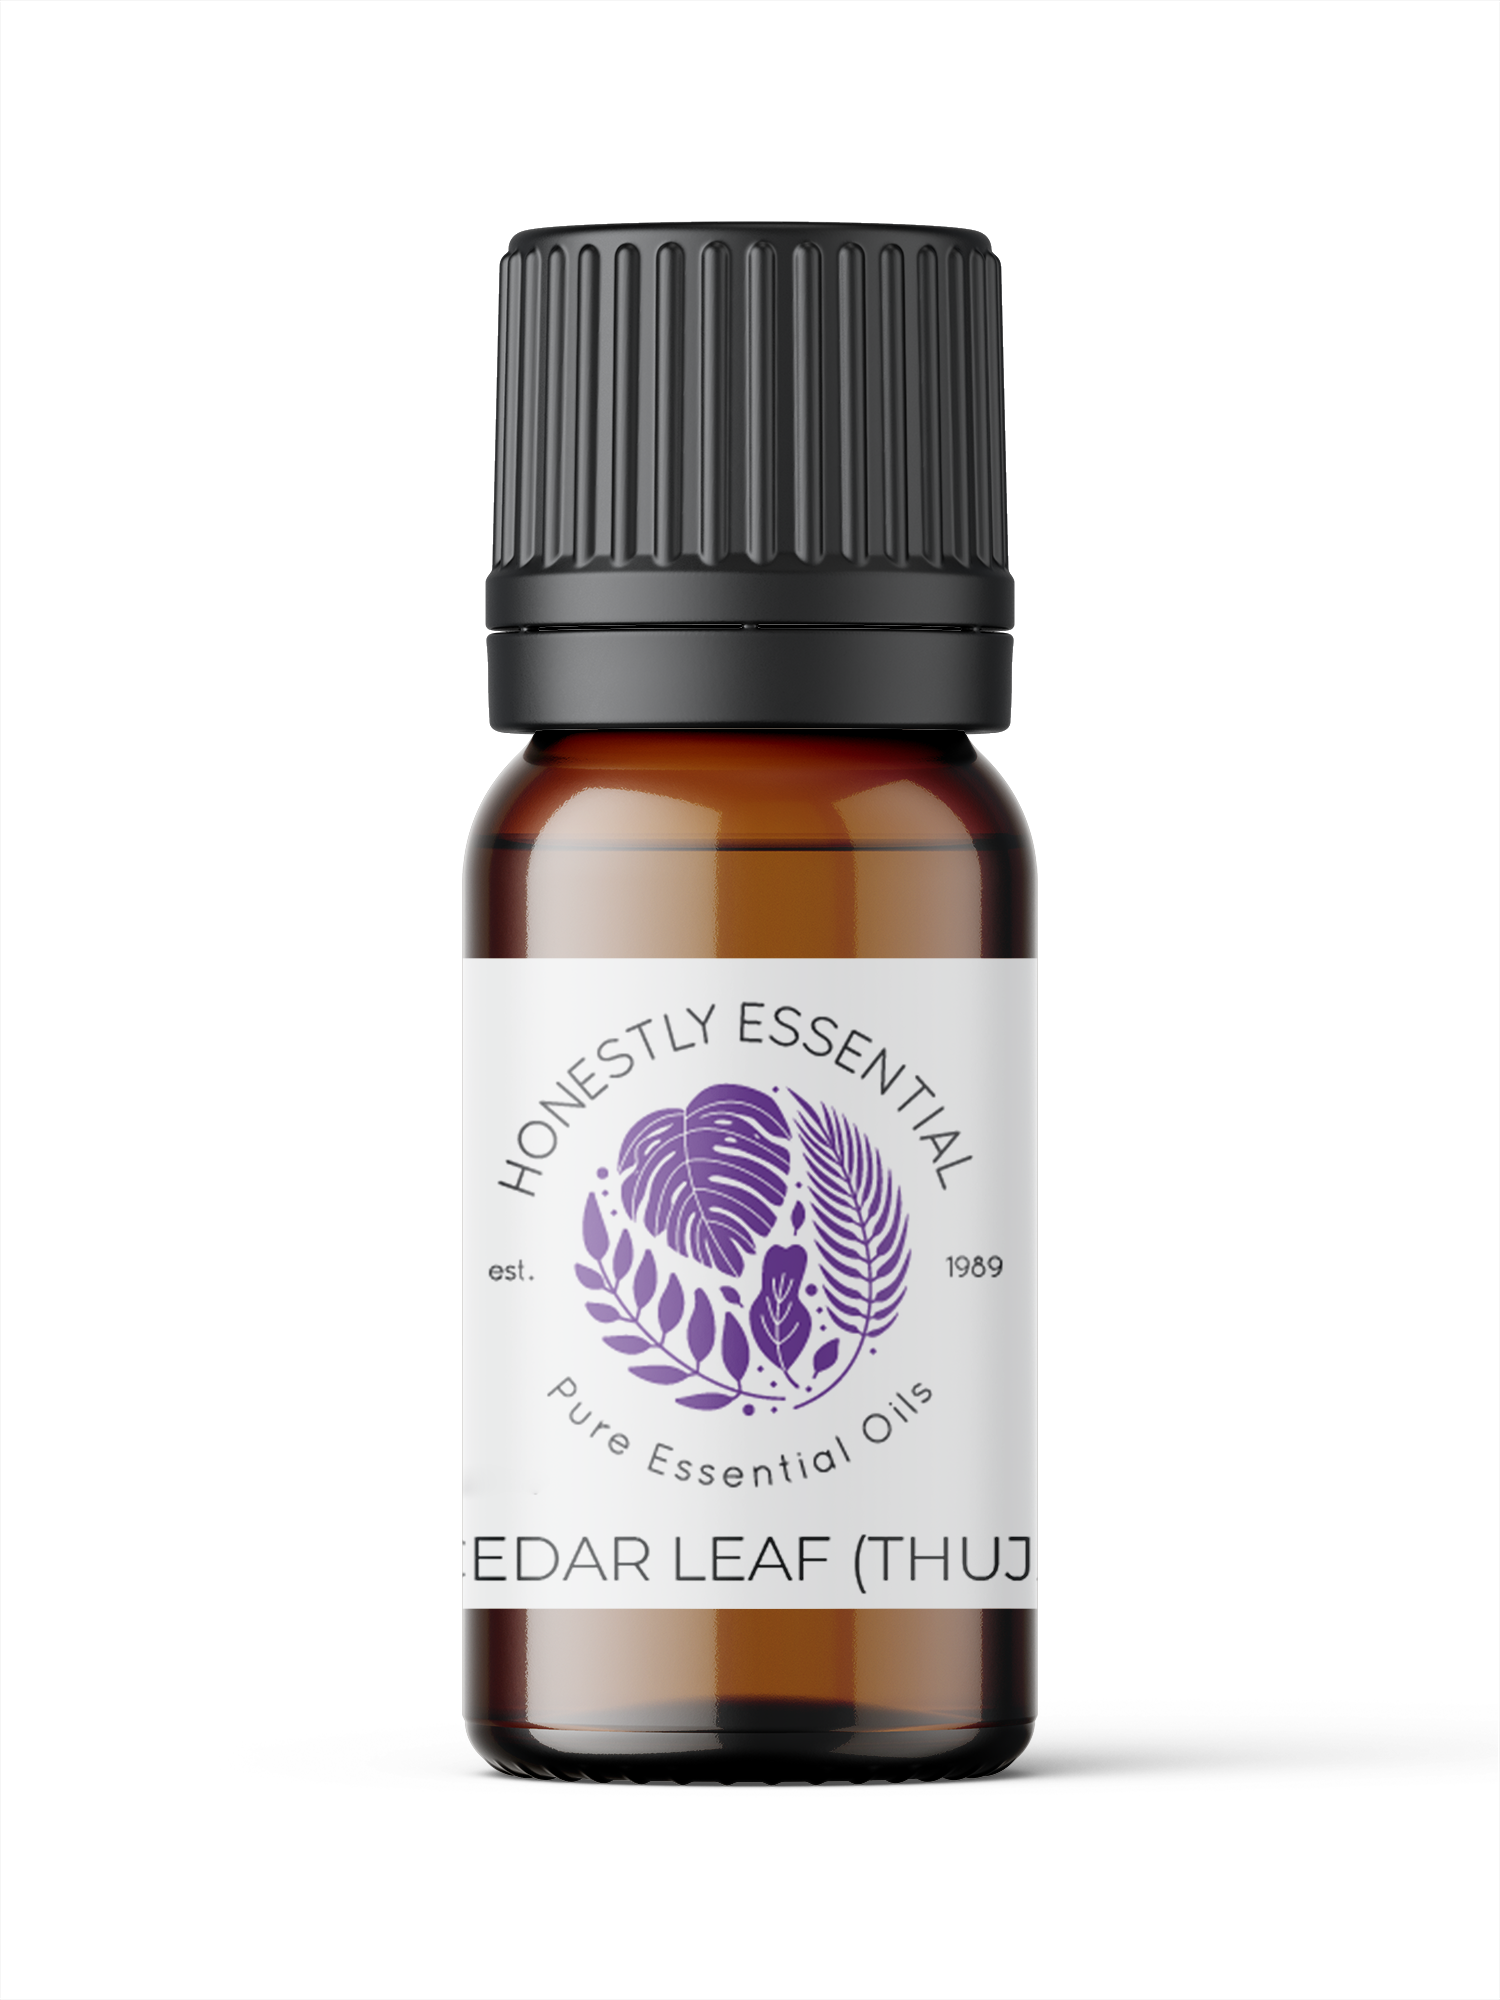 Cedar Leaf (Thuja) Essential Oil - Essential Oils | Honestly Essential Oils antiviral, athlete's foot, candida, cedar leaf, fungus, immune boost, Immunity, insect and pest repellent, lymphati